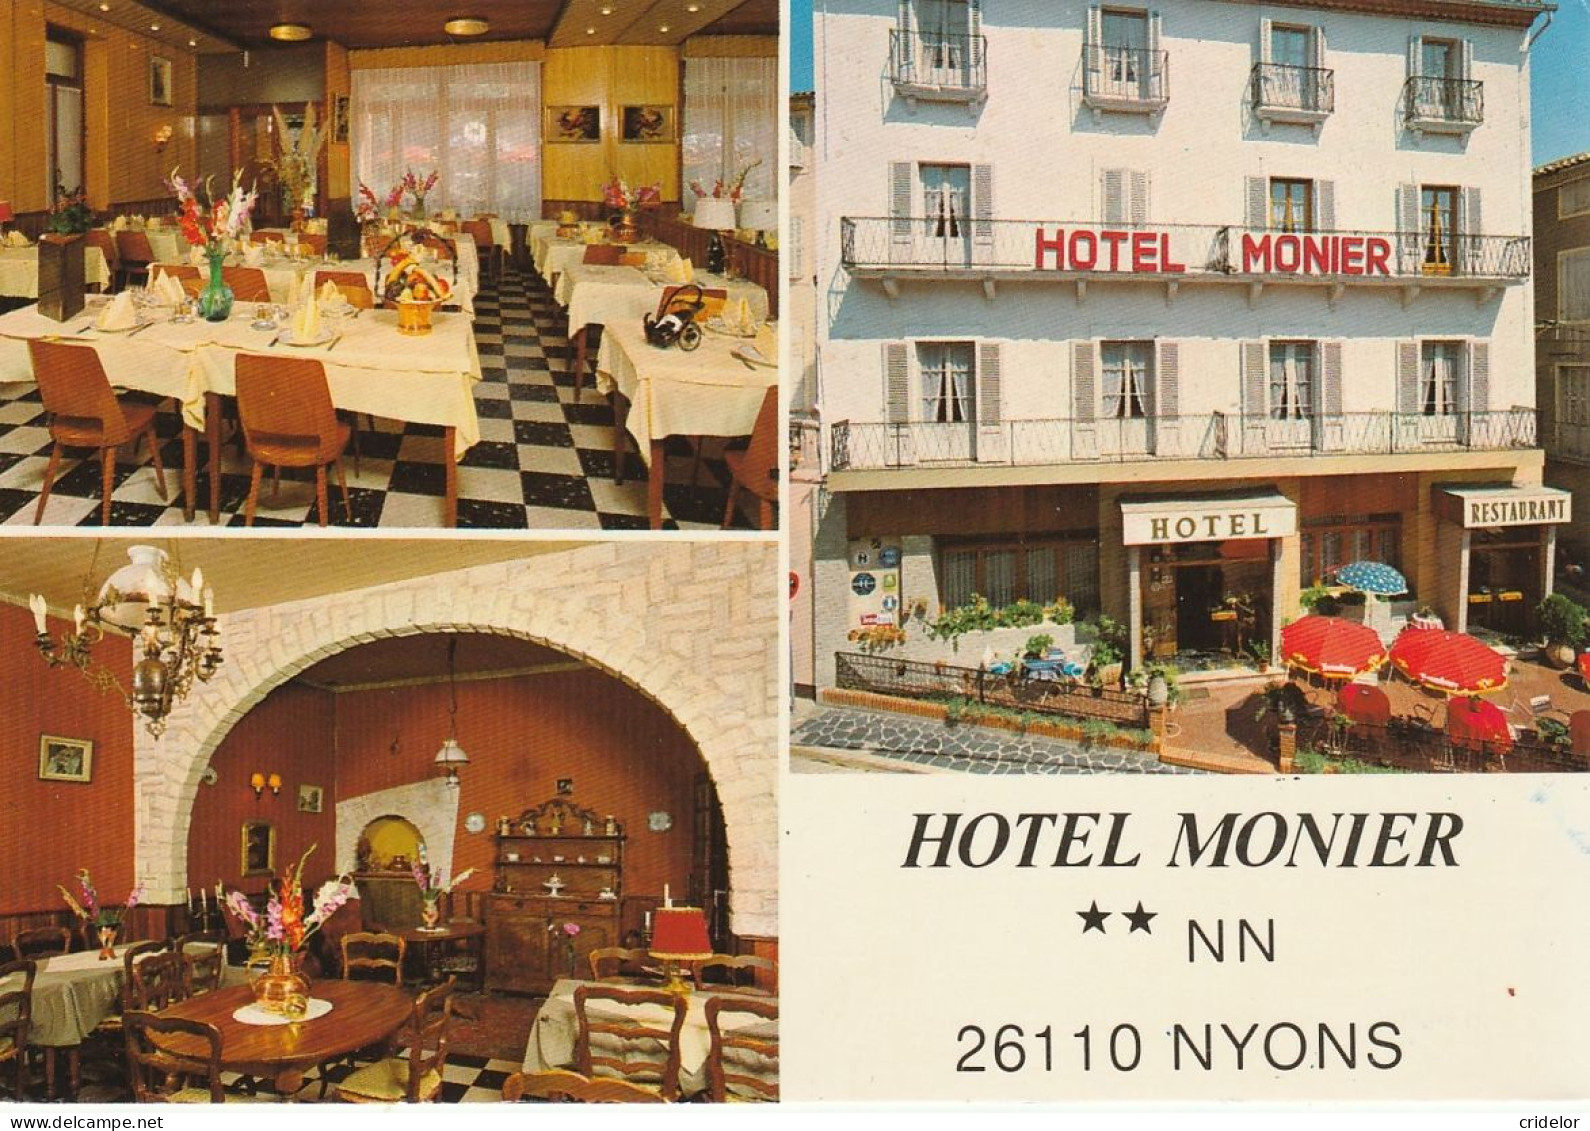 26 - NYONS - AVENUE HENRI ROCHIER - CAFE HOTEL RESTAURANT MONIER - VUES MULTIPLES - BON ETAT - Nyons